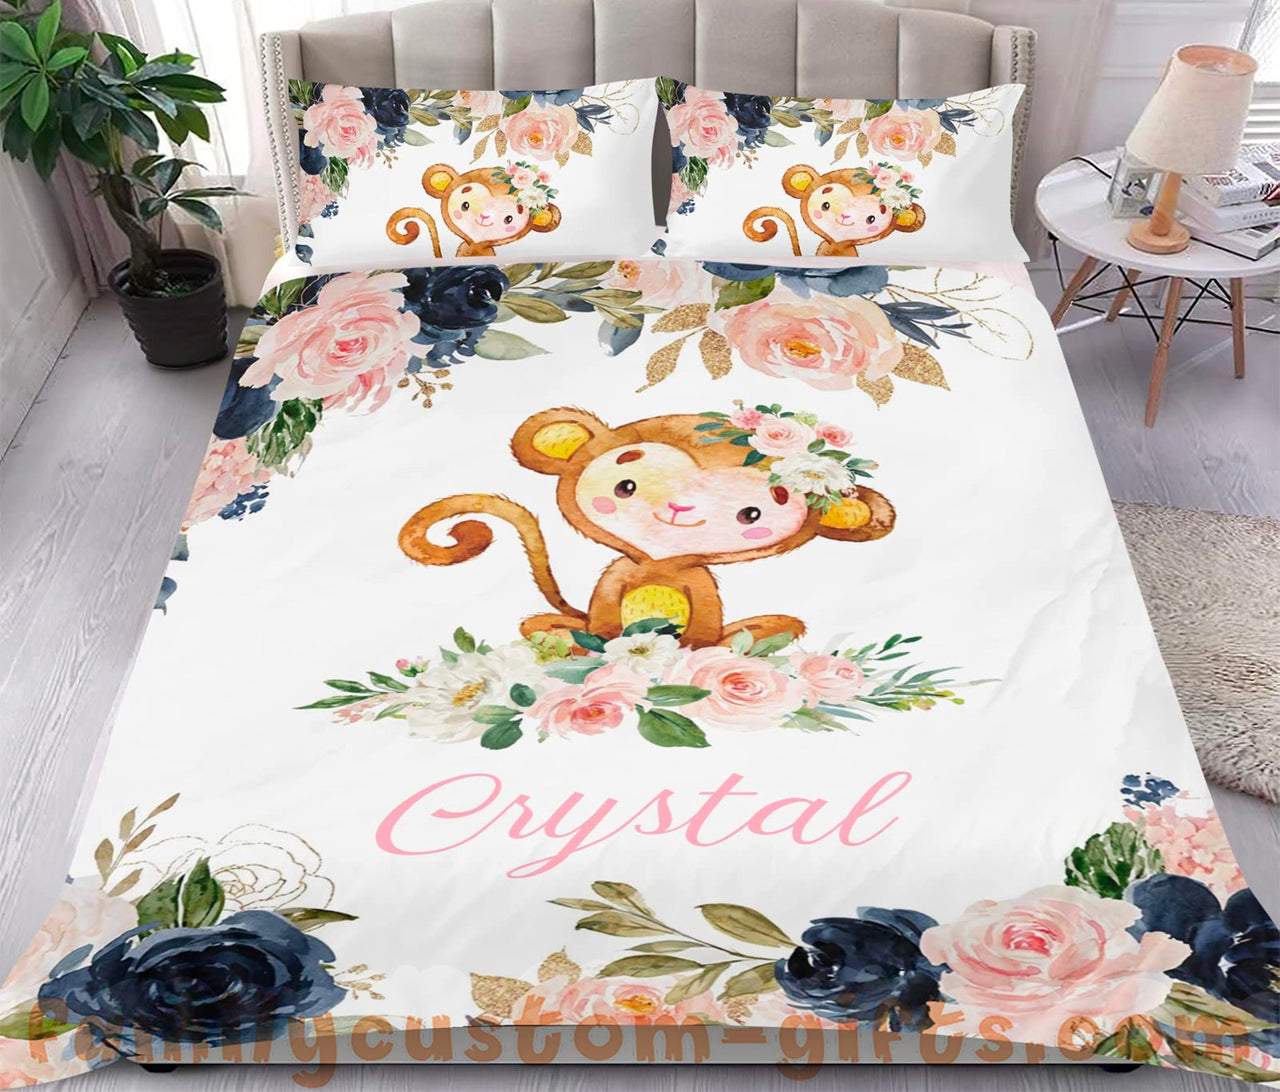 Custom Quilt Sets Watercolor Pink Dark Floral Monkey Premium Quilt Bedding for Boys Girls Men Women